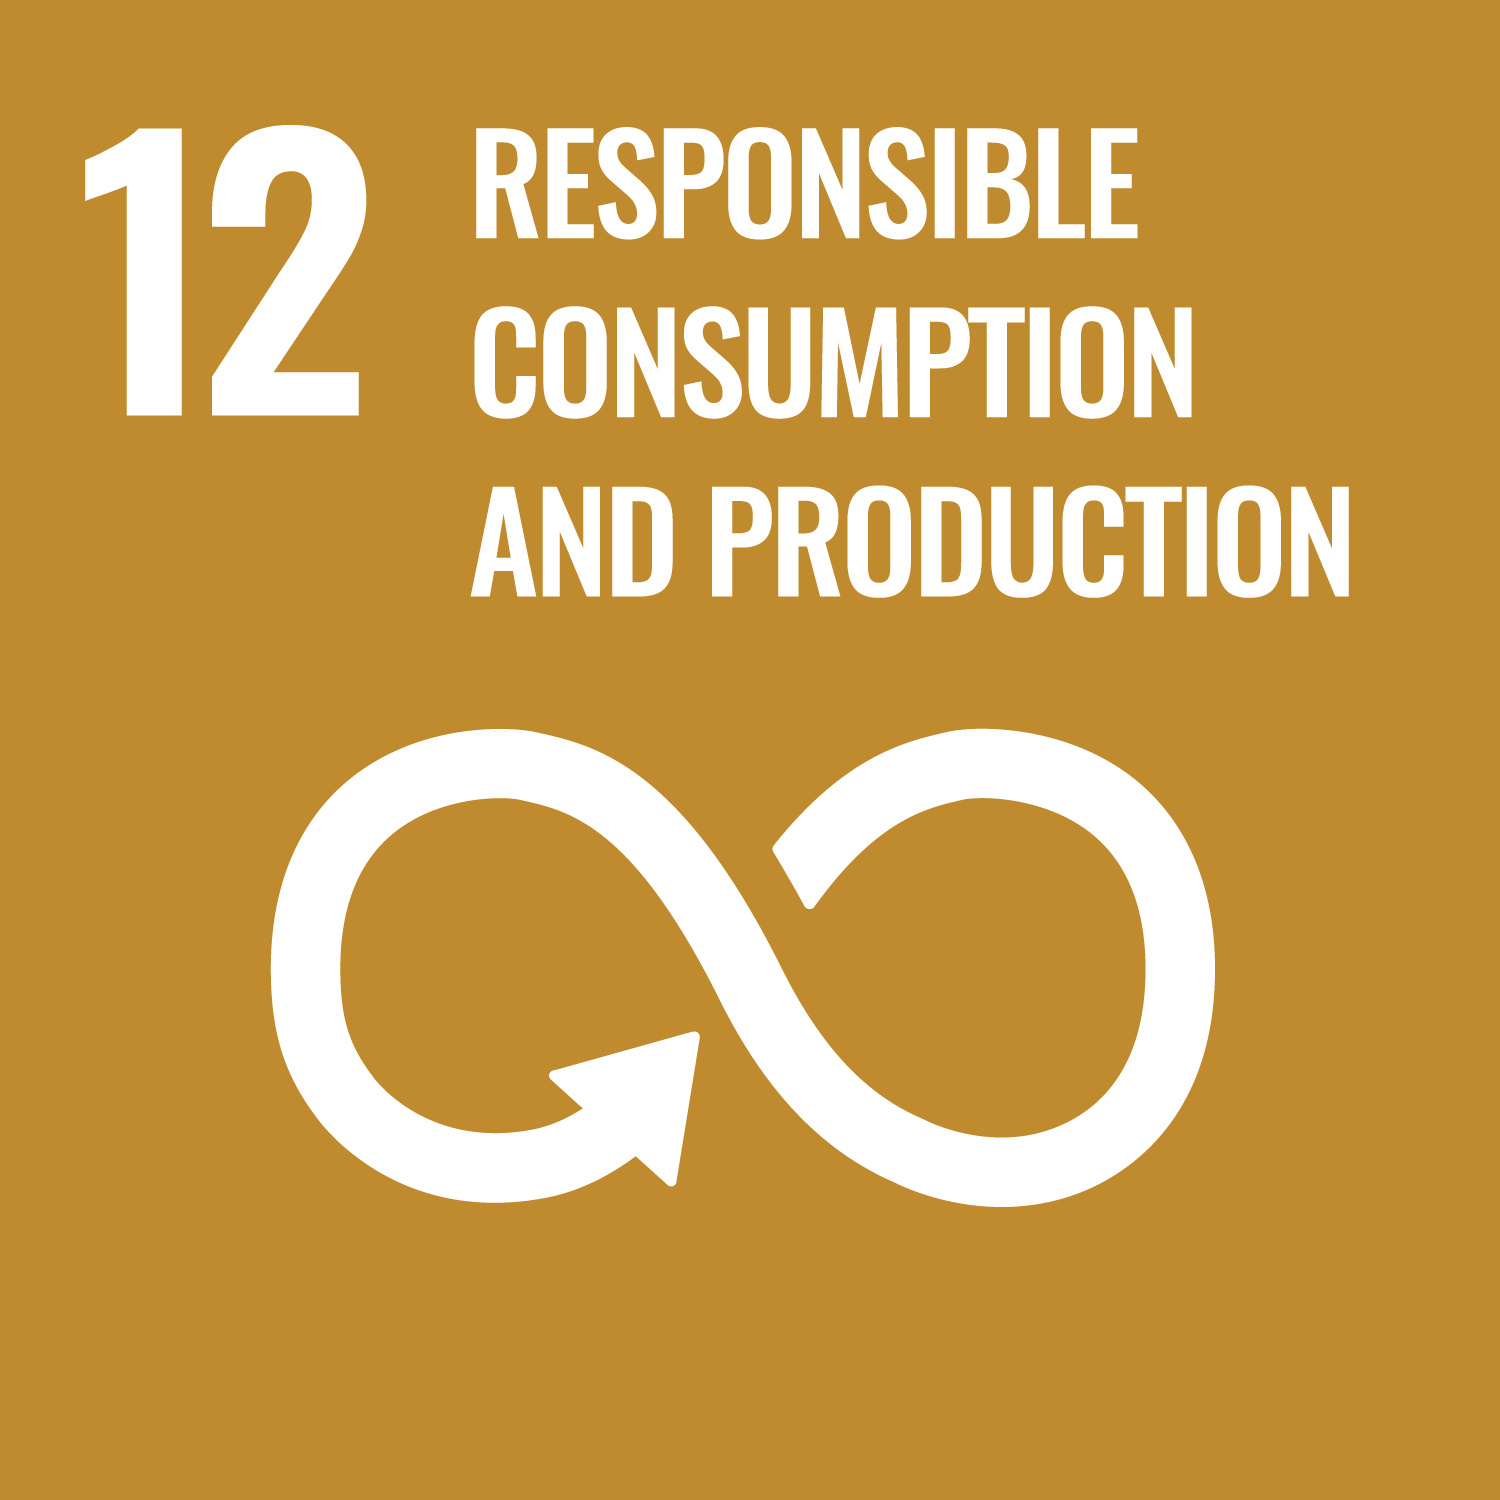 Sustainable Development Goal Nr. 12